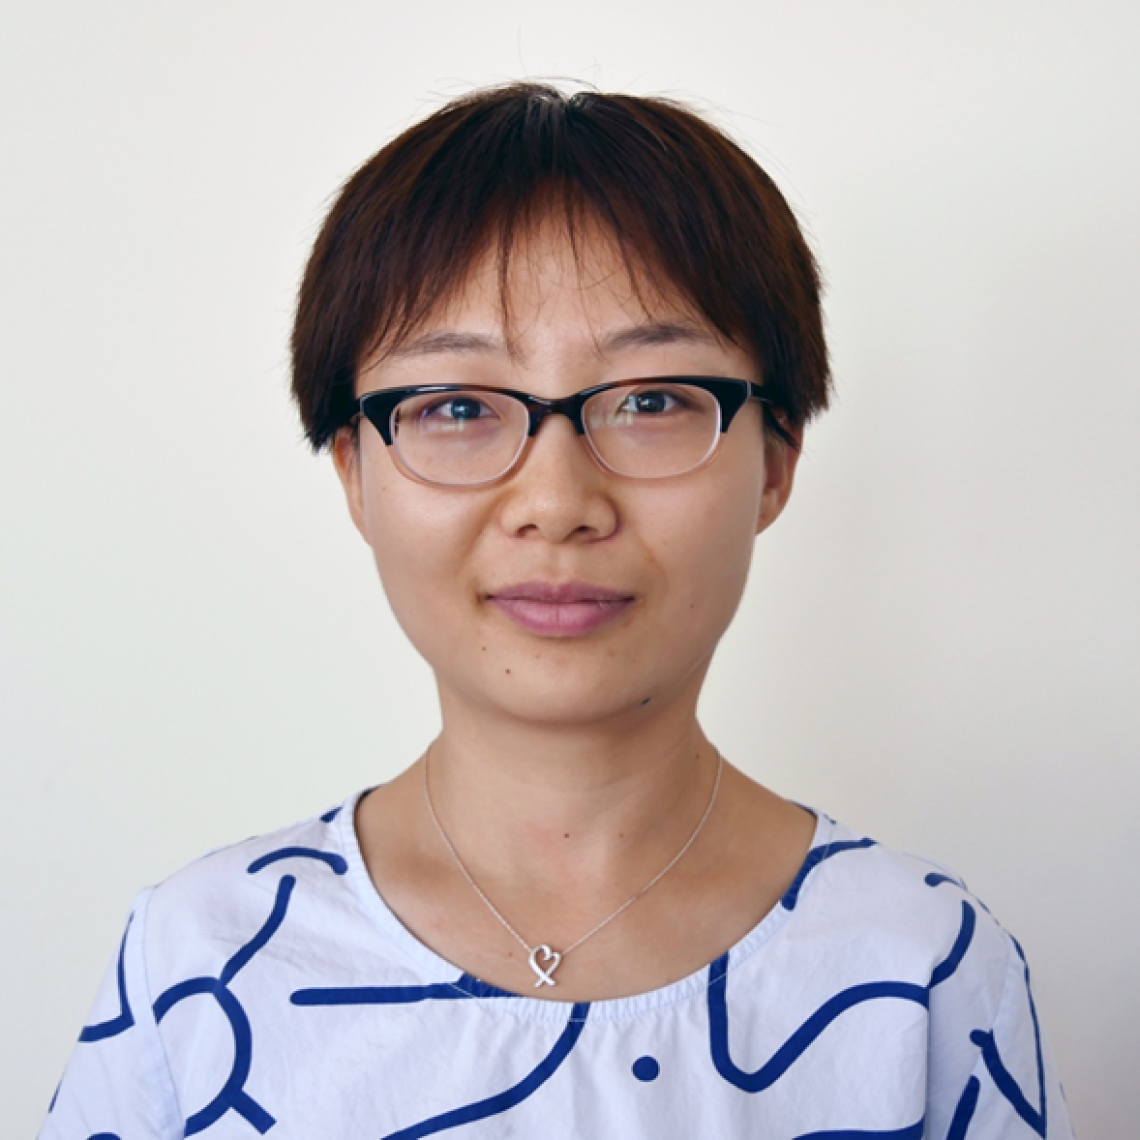 Qi Li, Assistant Professor, School of Civil and Environmental Engineering, Cornell University